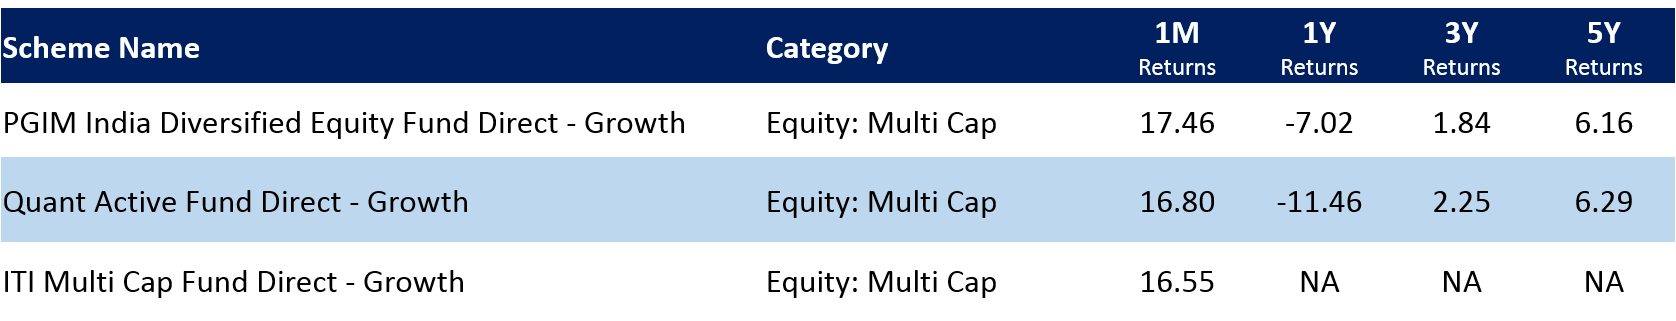 Multicap funds in April 2020